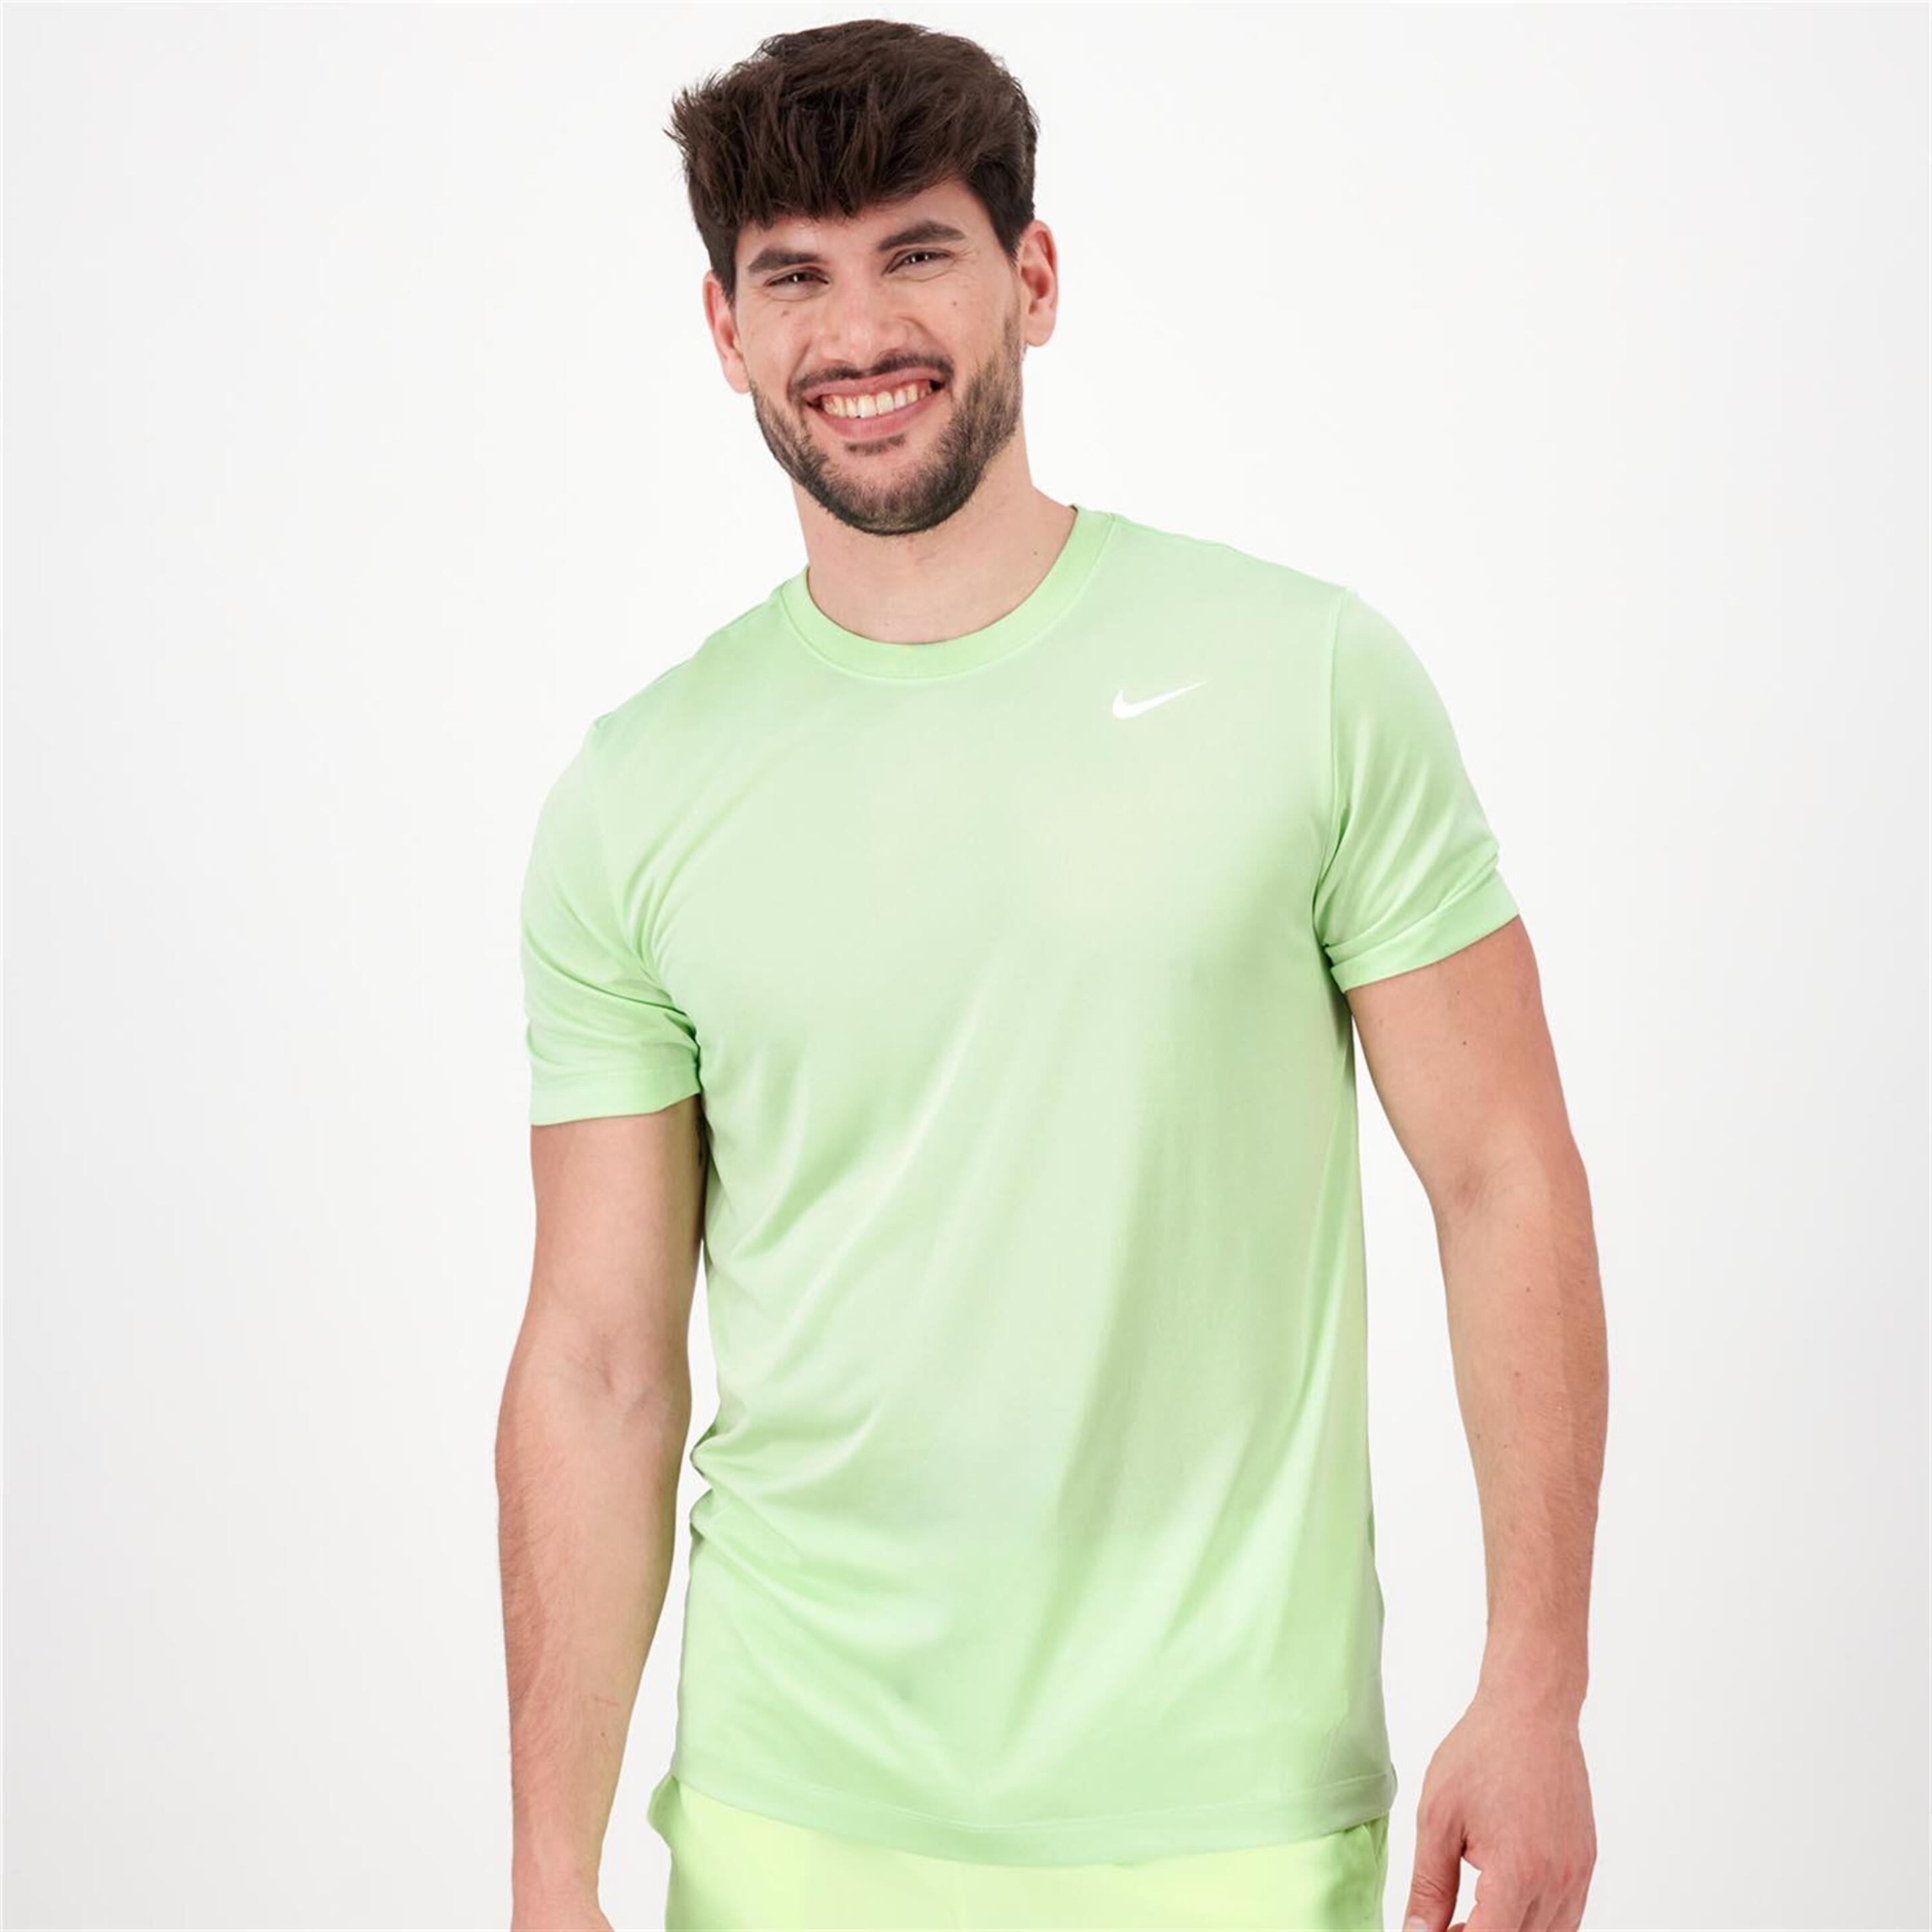 Camiseta Nike - verde - Camiseta Running Hombre